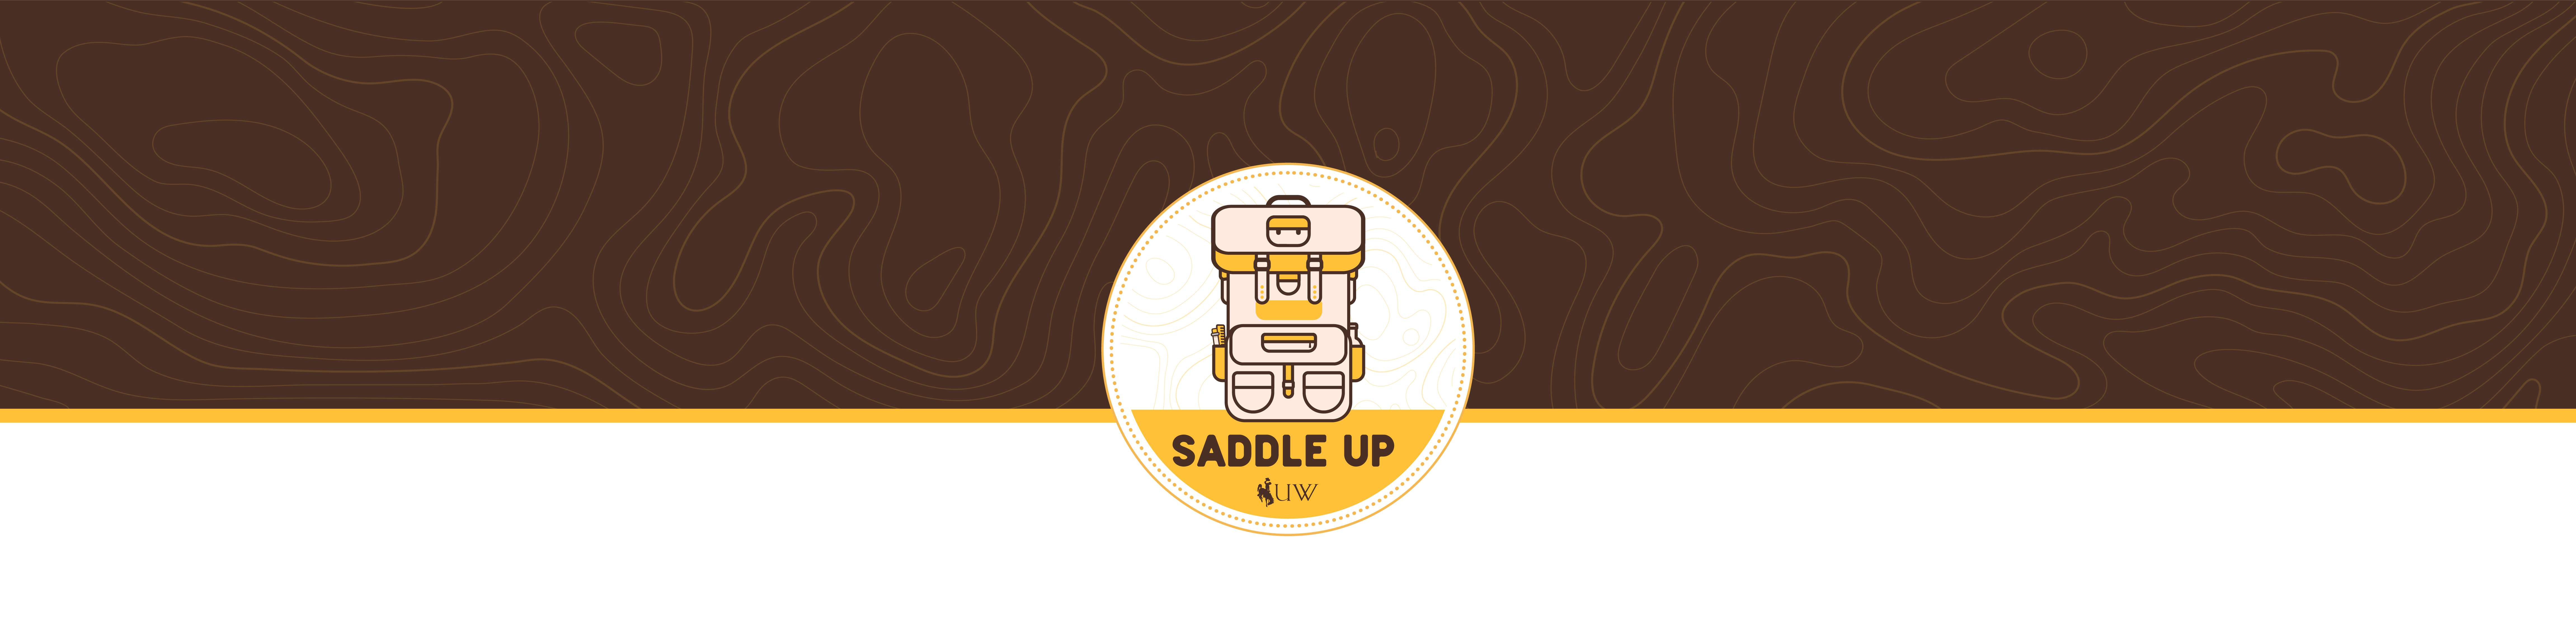 Saddle Up logo on a brown background.